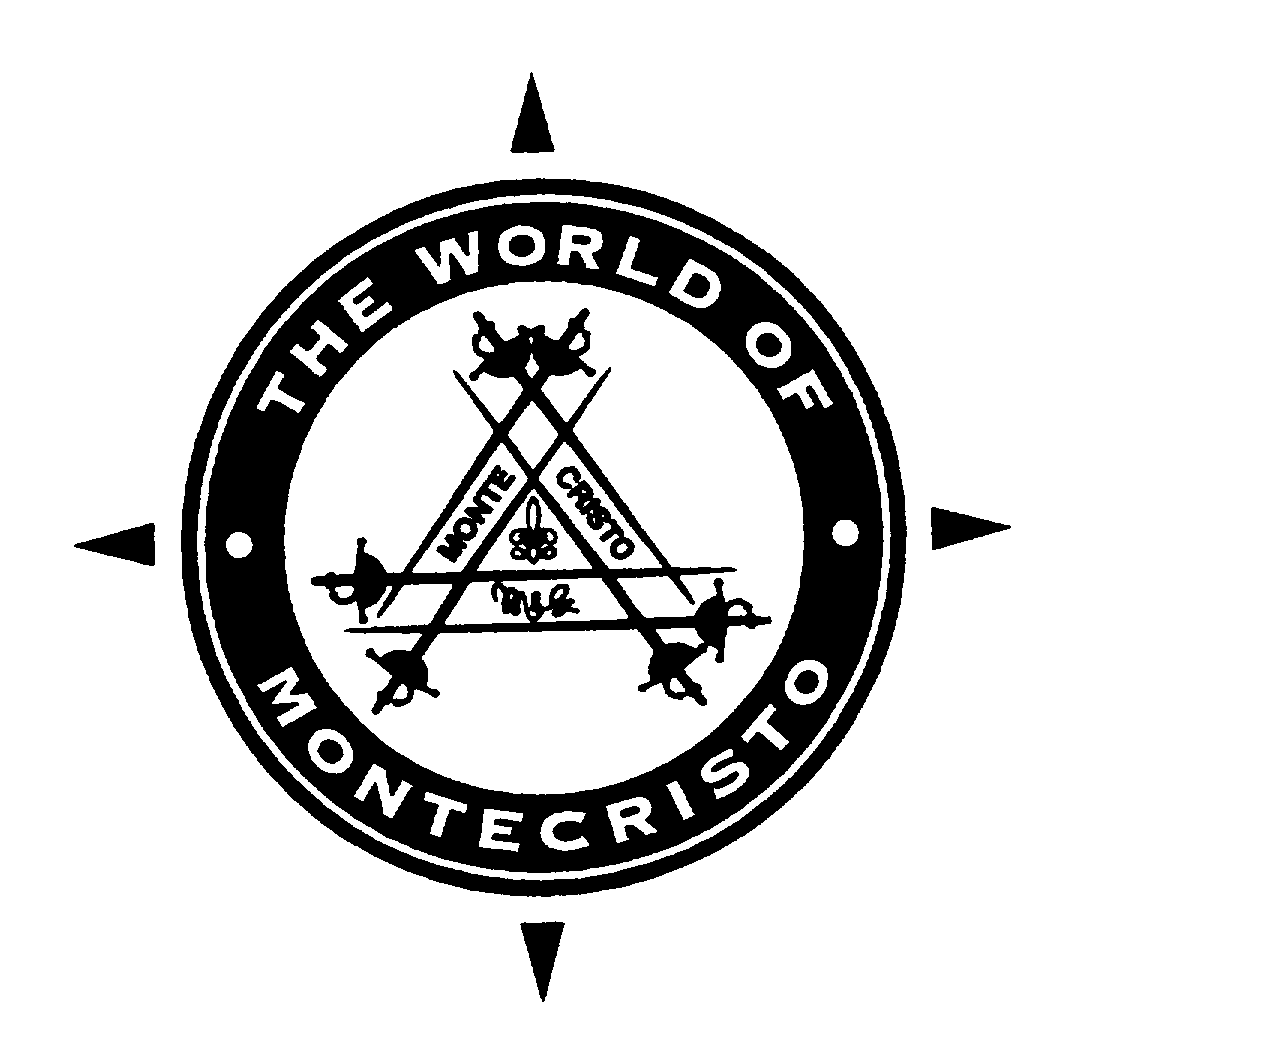  THE WORLD OF MONTECRISTO MONTE CRISTO